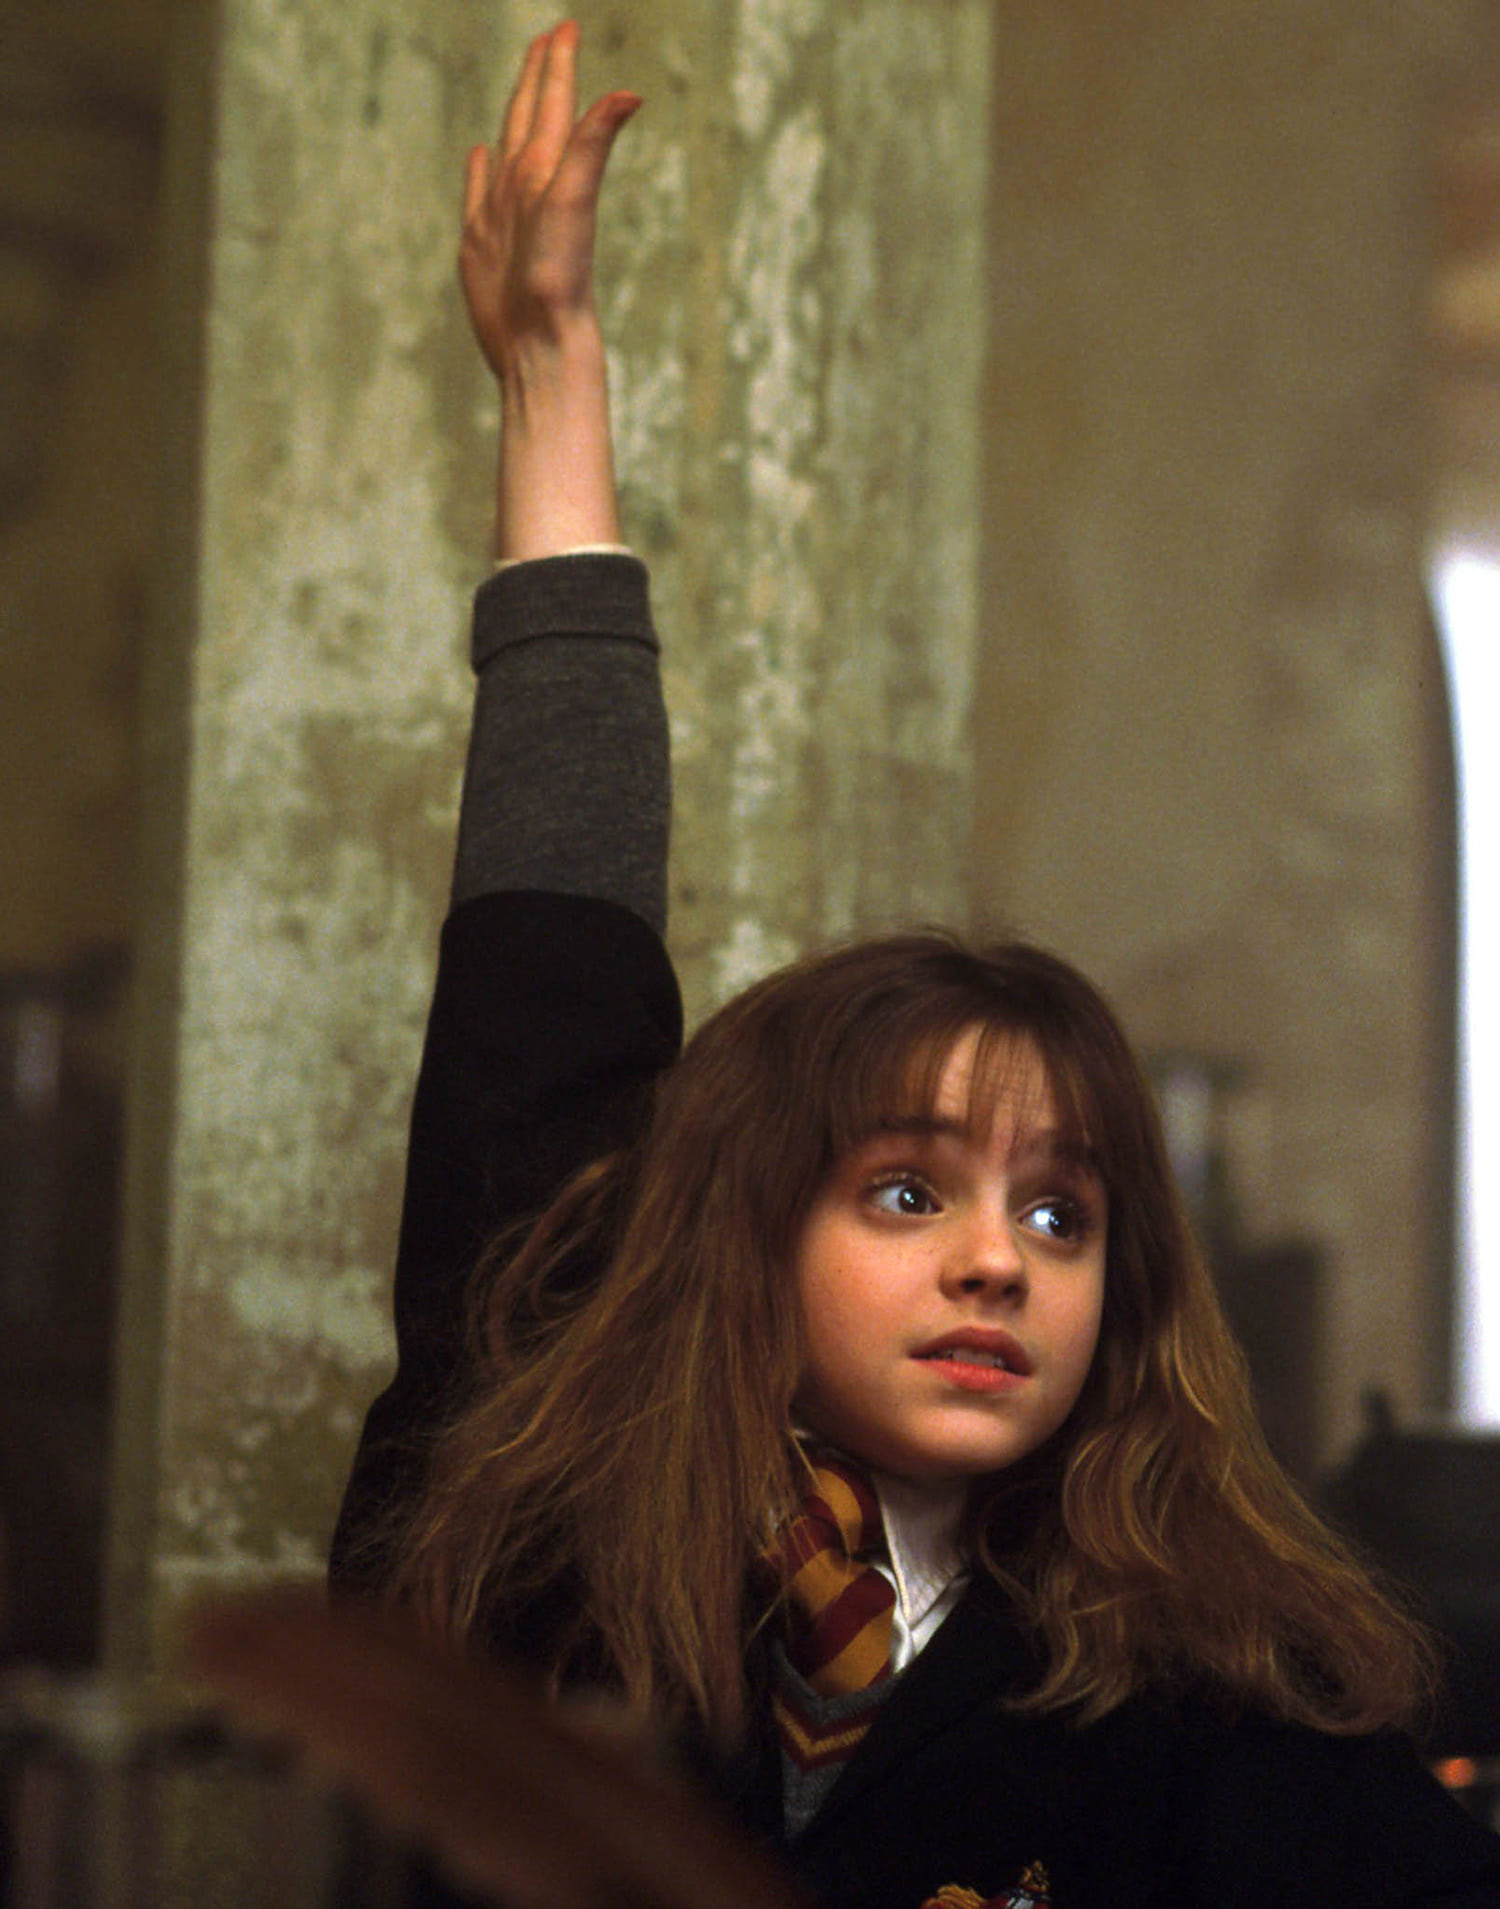 Hermione raises her hand